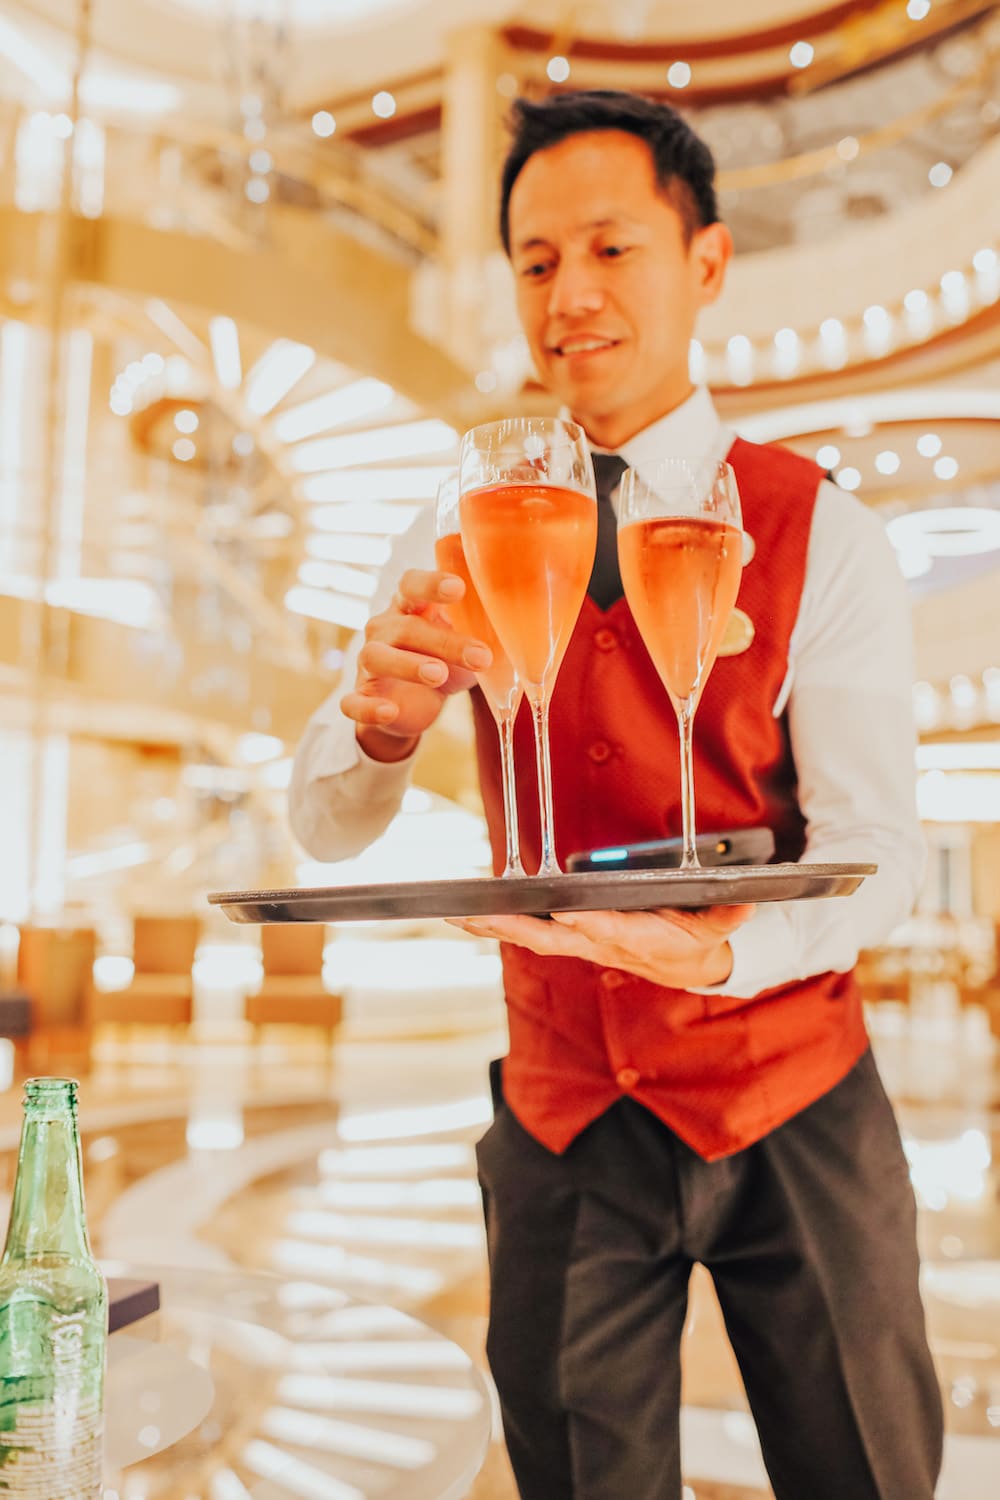 sky princess ship review - piazza champagne - princess cruises